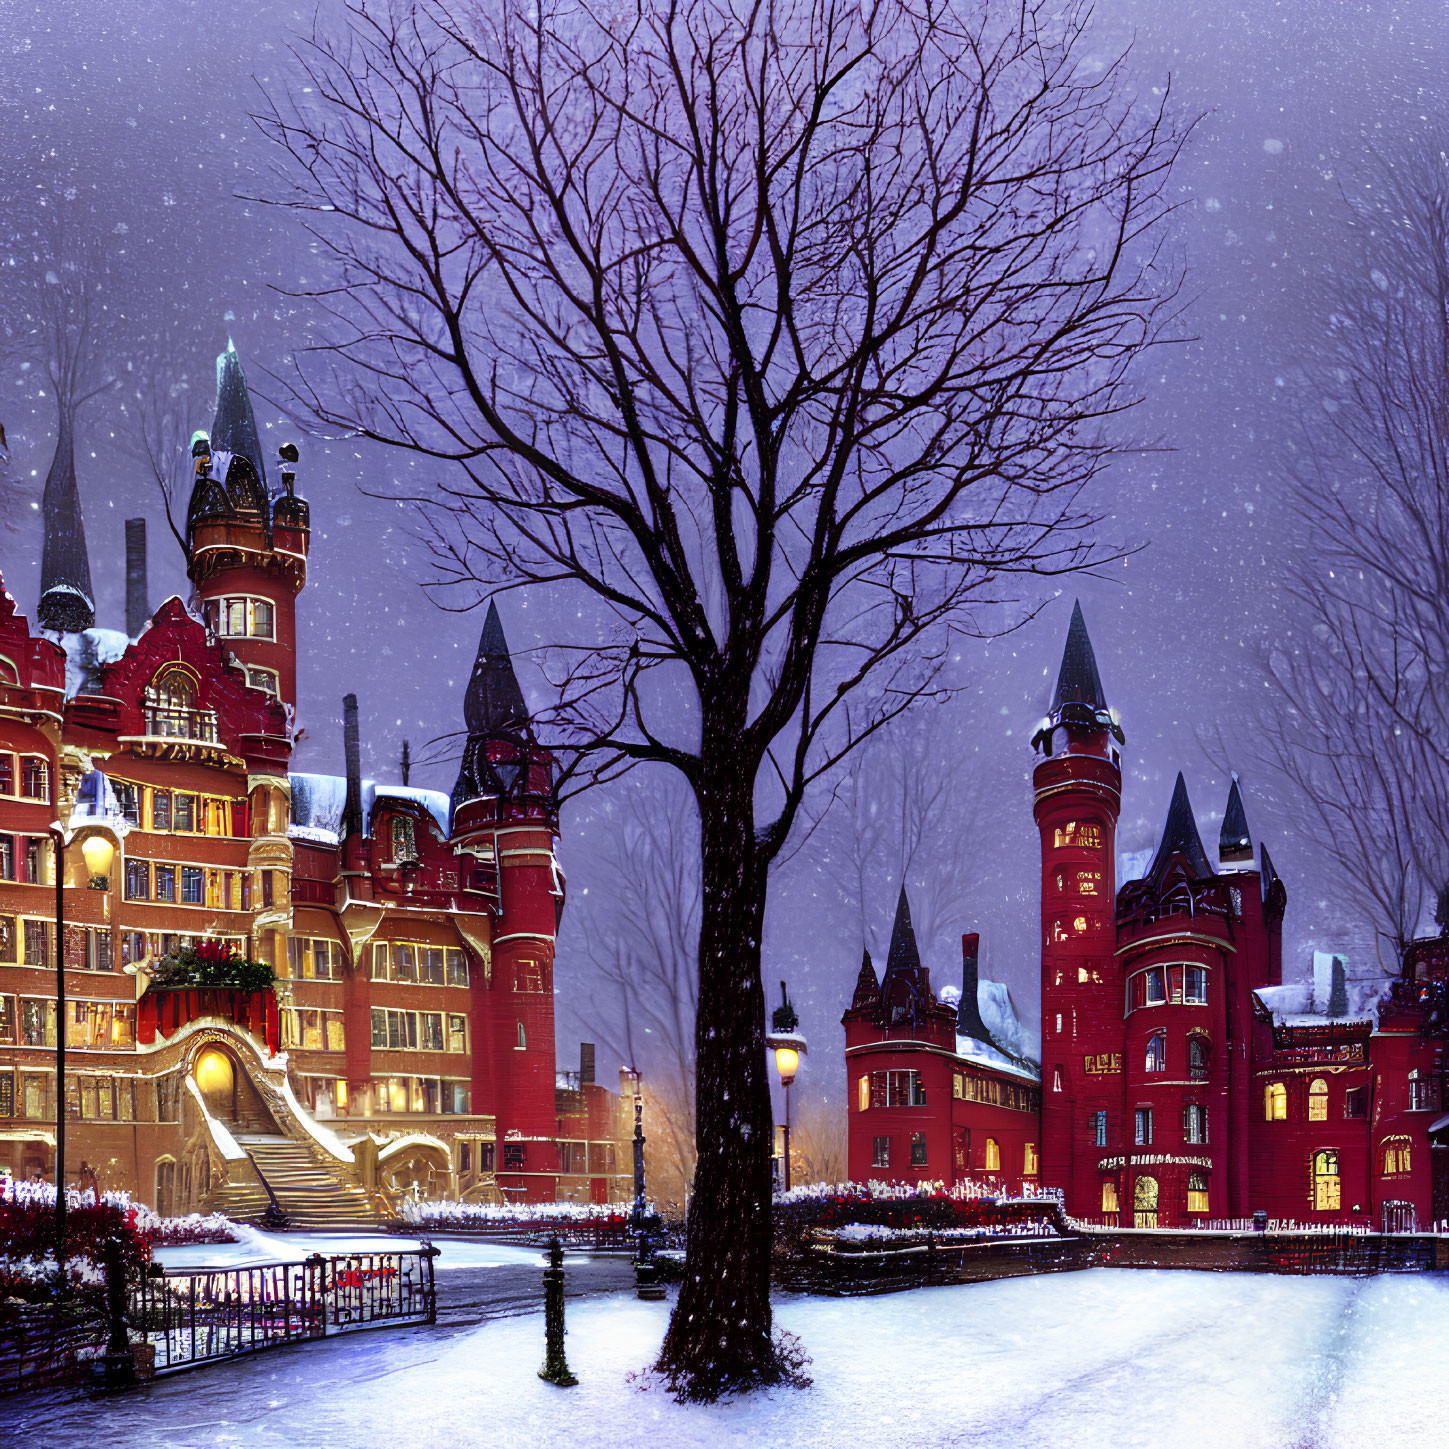 Snowy evening castle with illuminated fairytale vibes